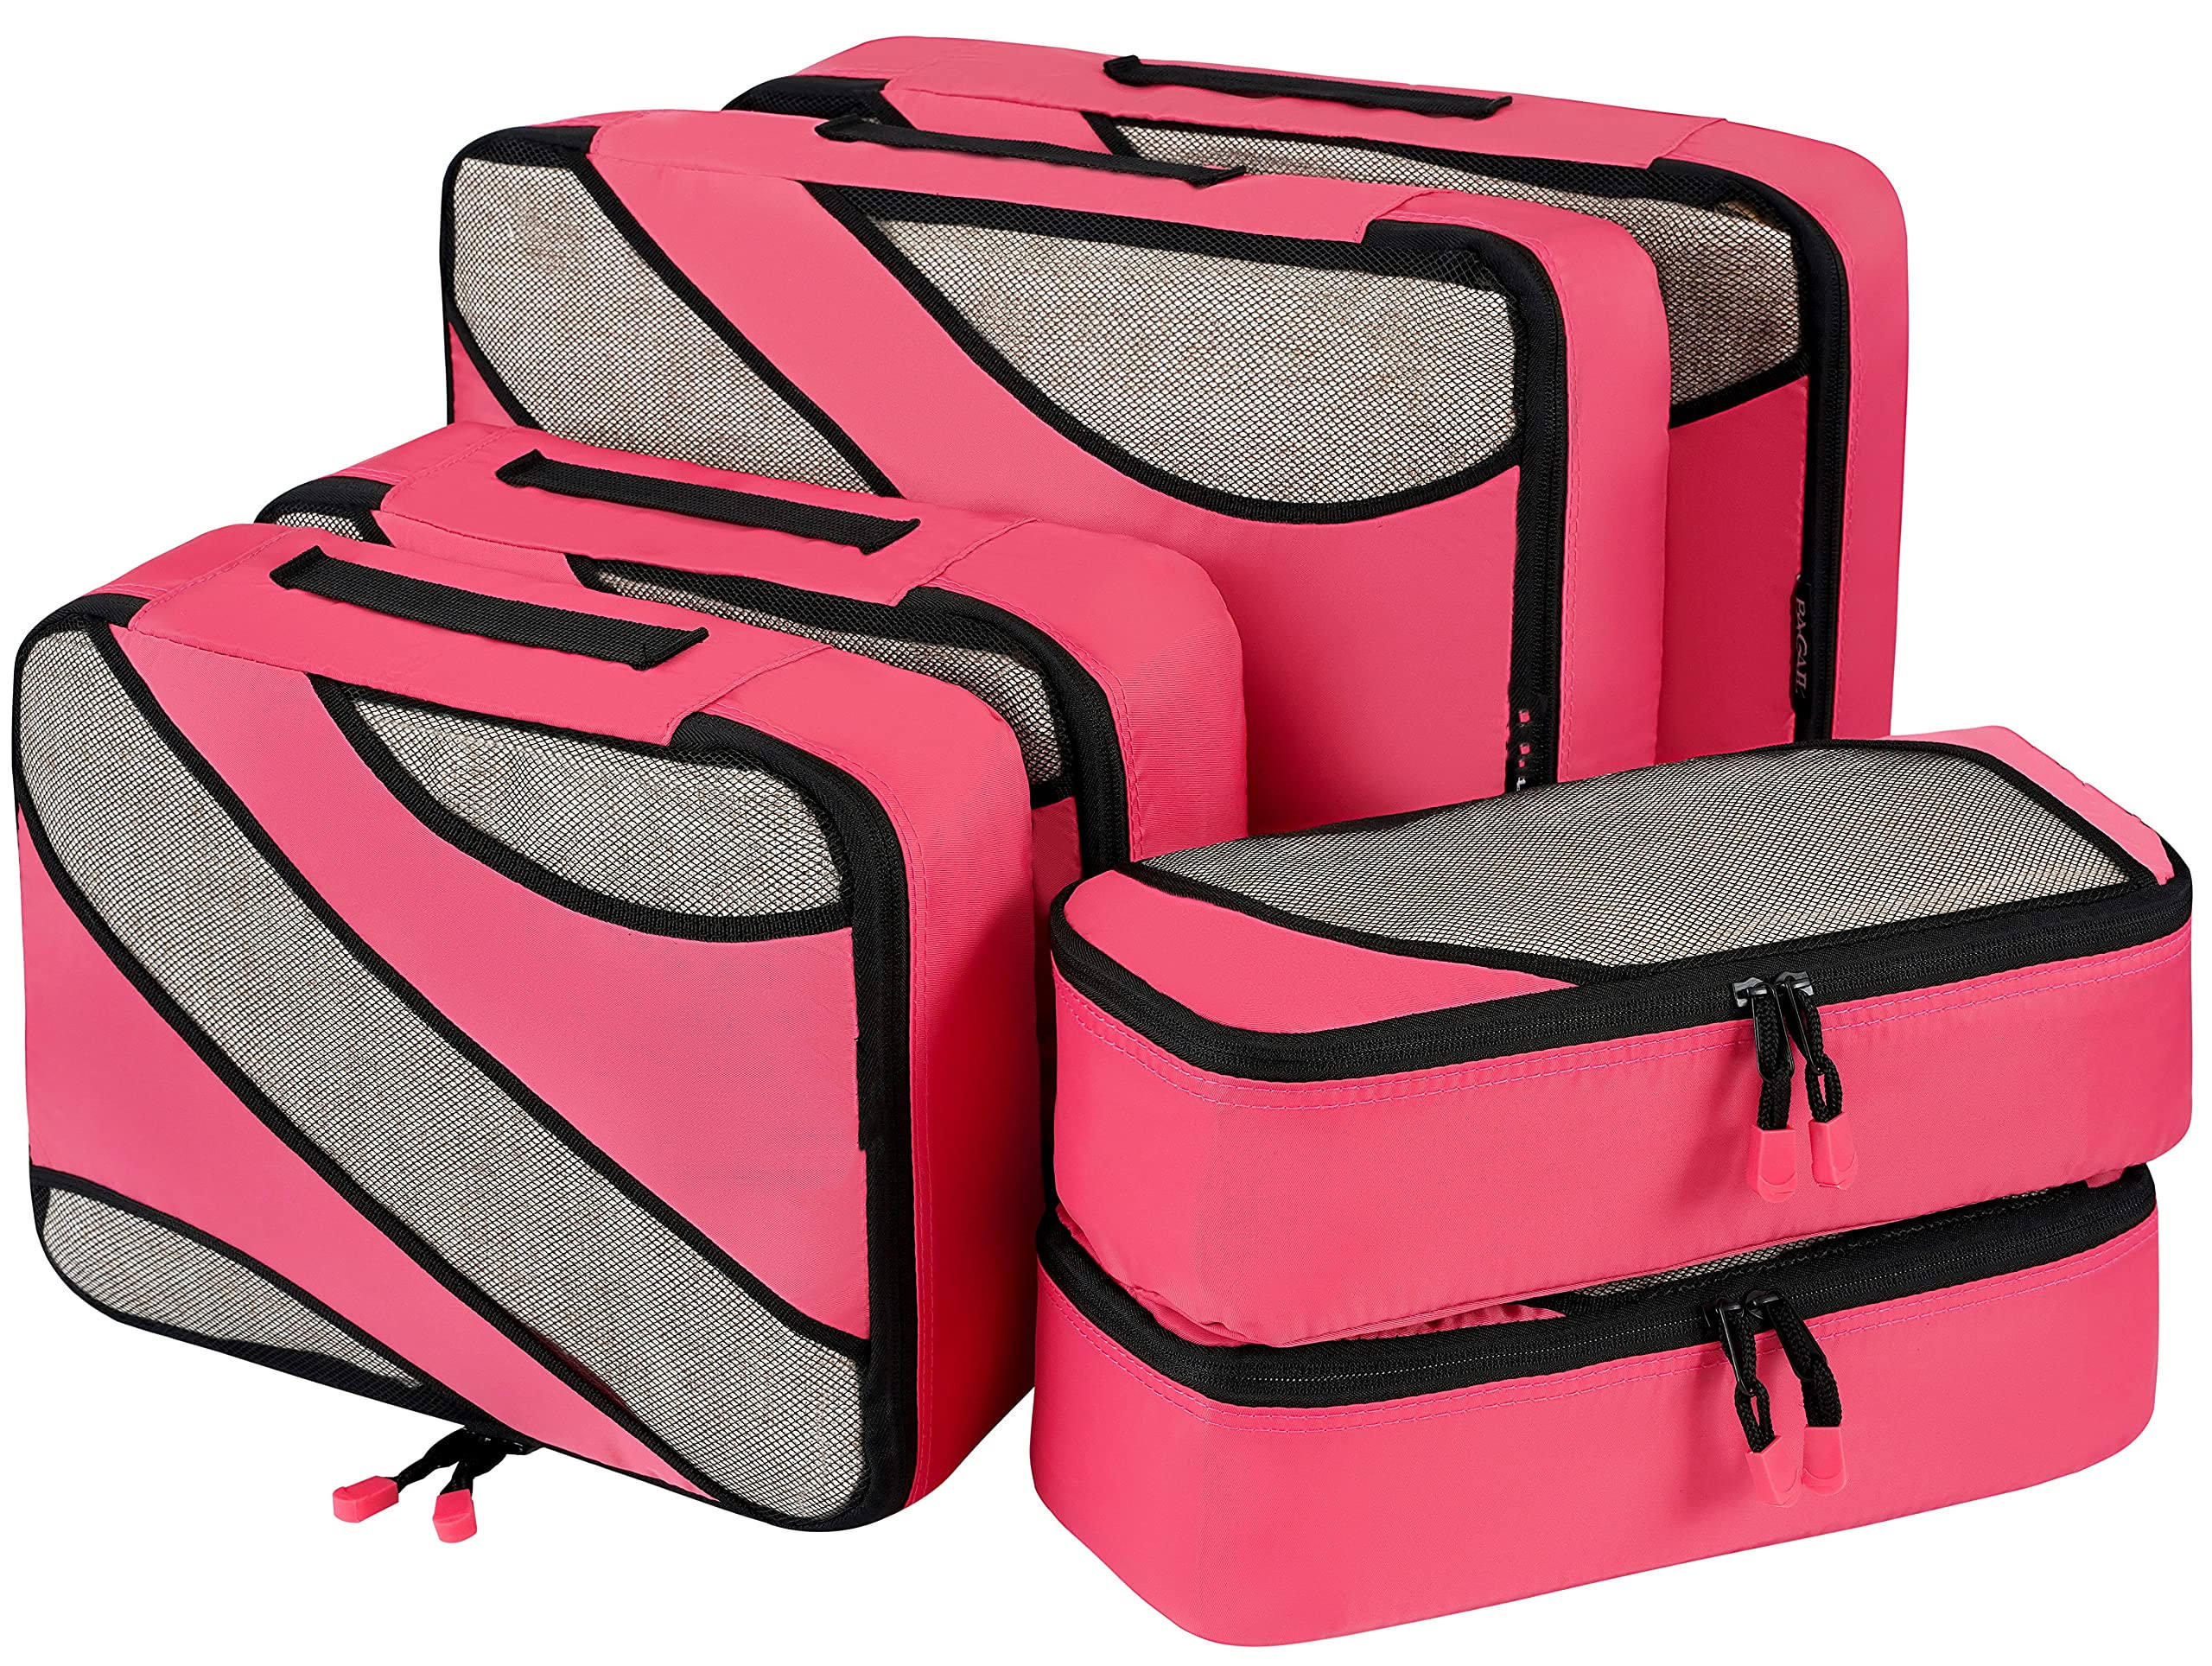 6 Set Packing Cubes Bag Product Details